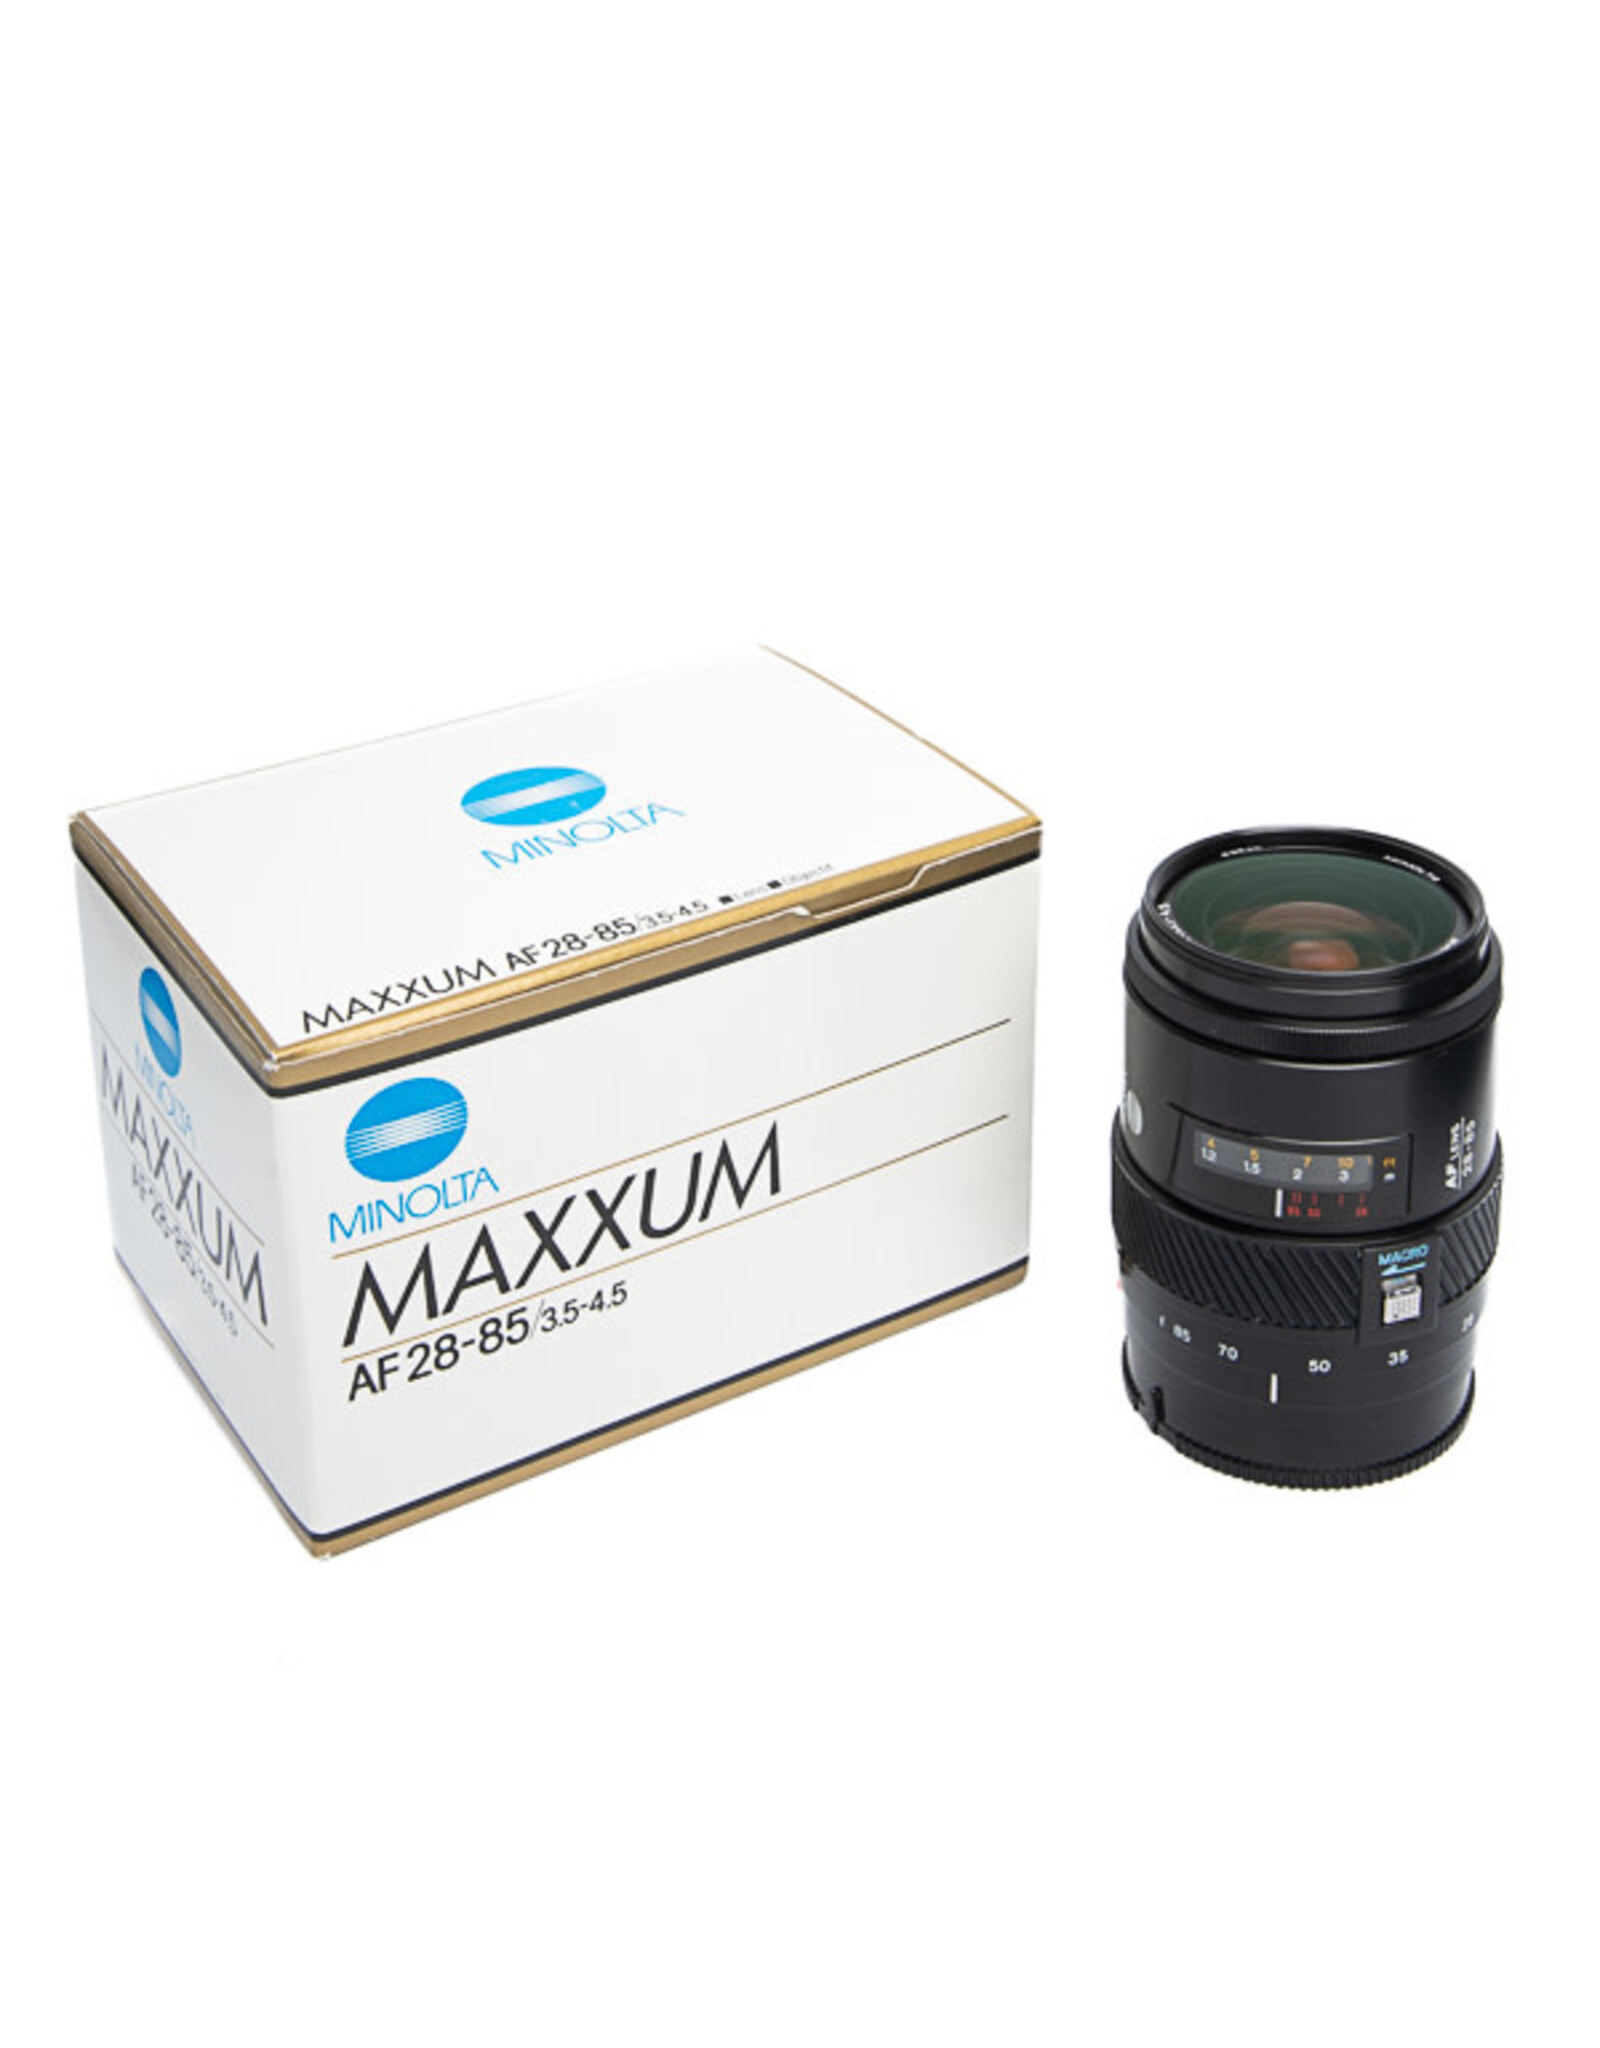 Minolta Minolta Maxxum 28-85mm f3.5-4.5 AF Lens